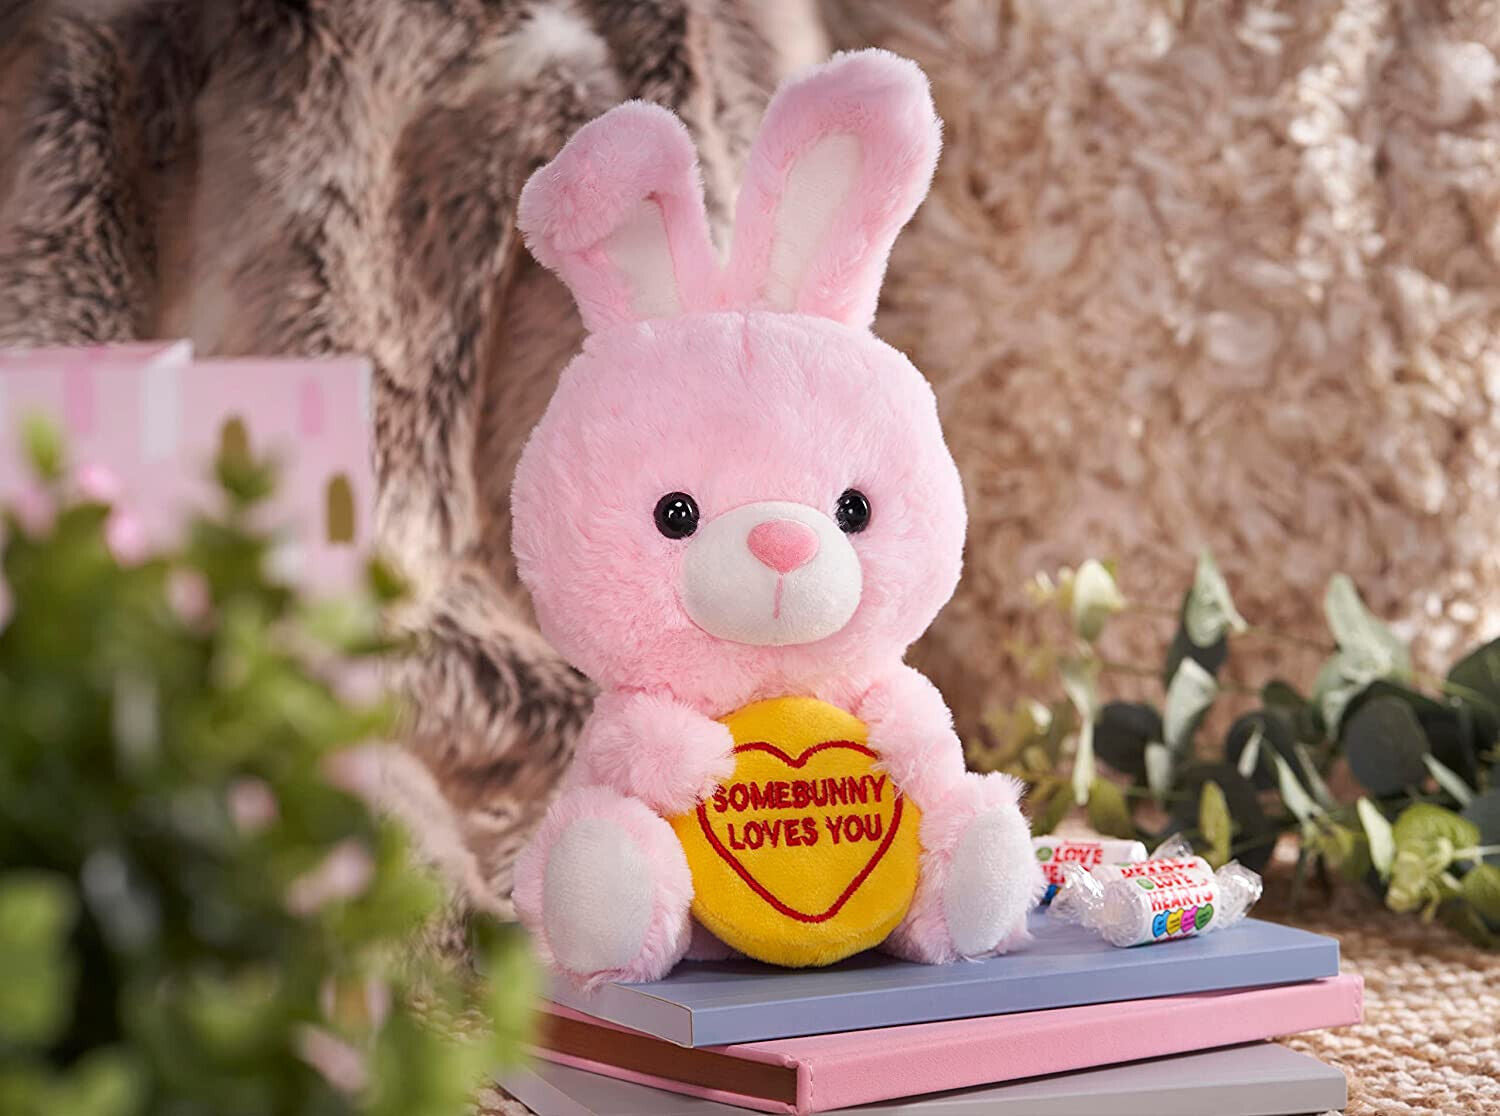 Swizzels Love Hearts Somebunny Loves You Plush Toy - 18cm Soft Teddy (37509)